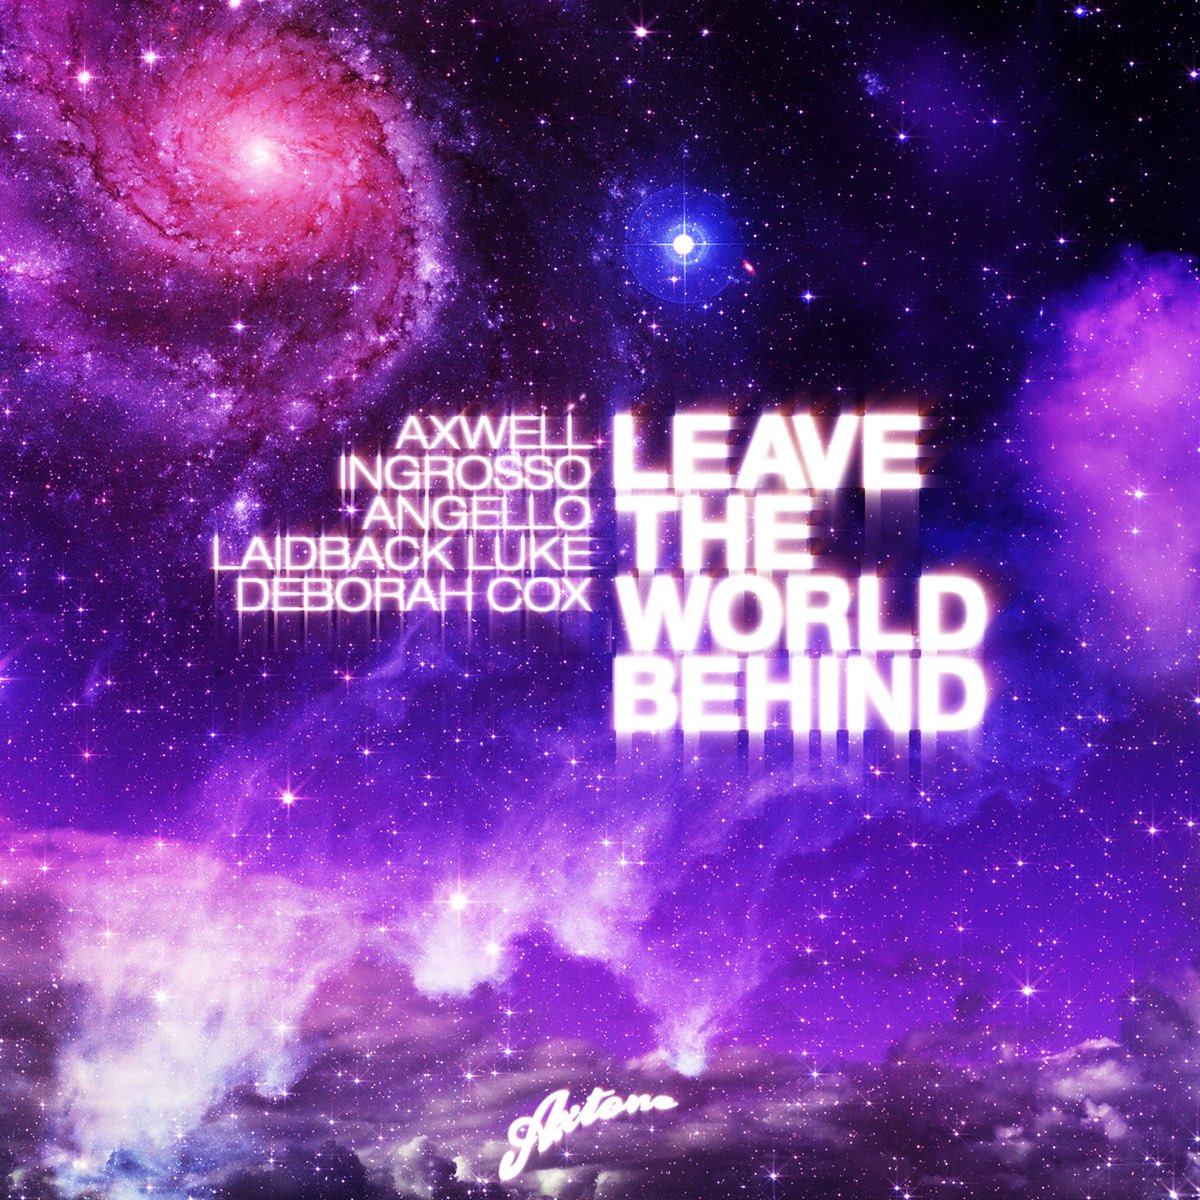 Axwell, Sebastian Ingrosso, Steve Angello, & Laidback Luke featuring Deborah Cox — Leave The World Behind cover artwork